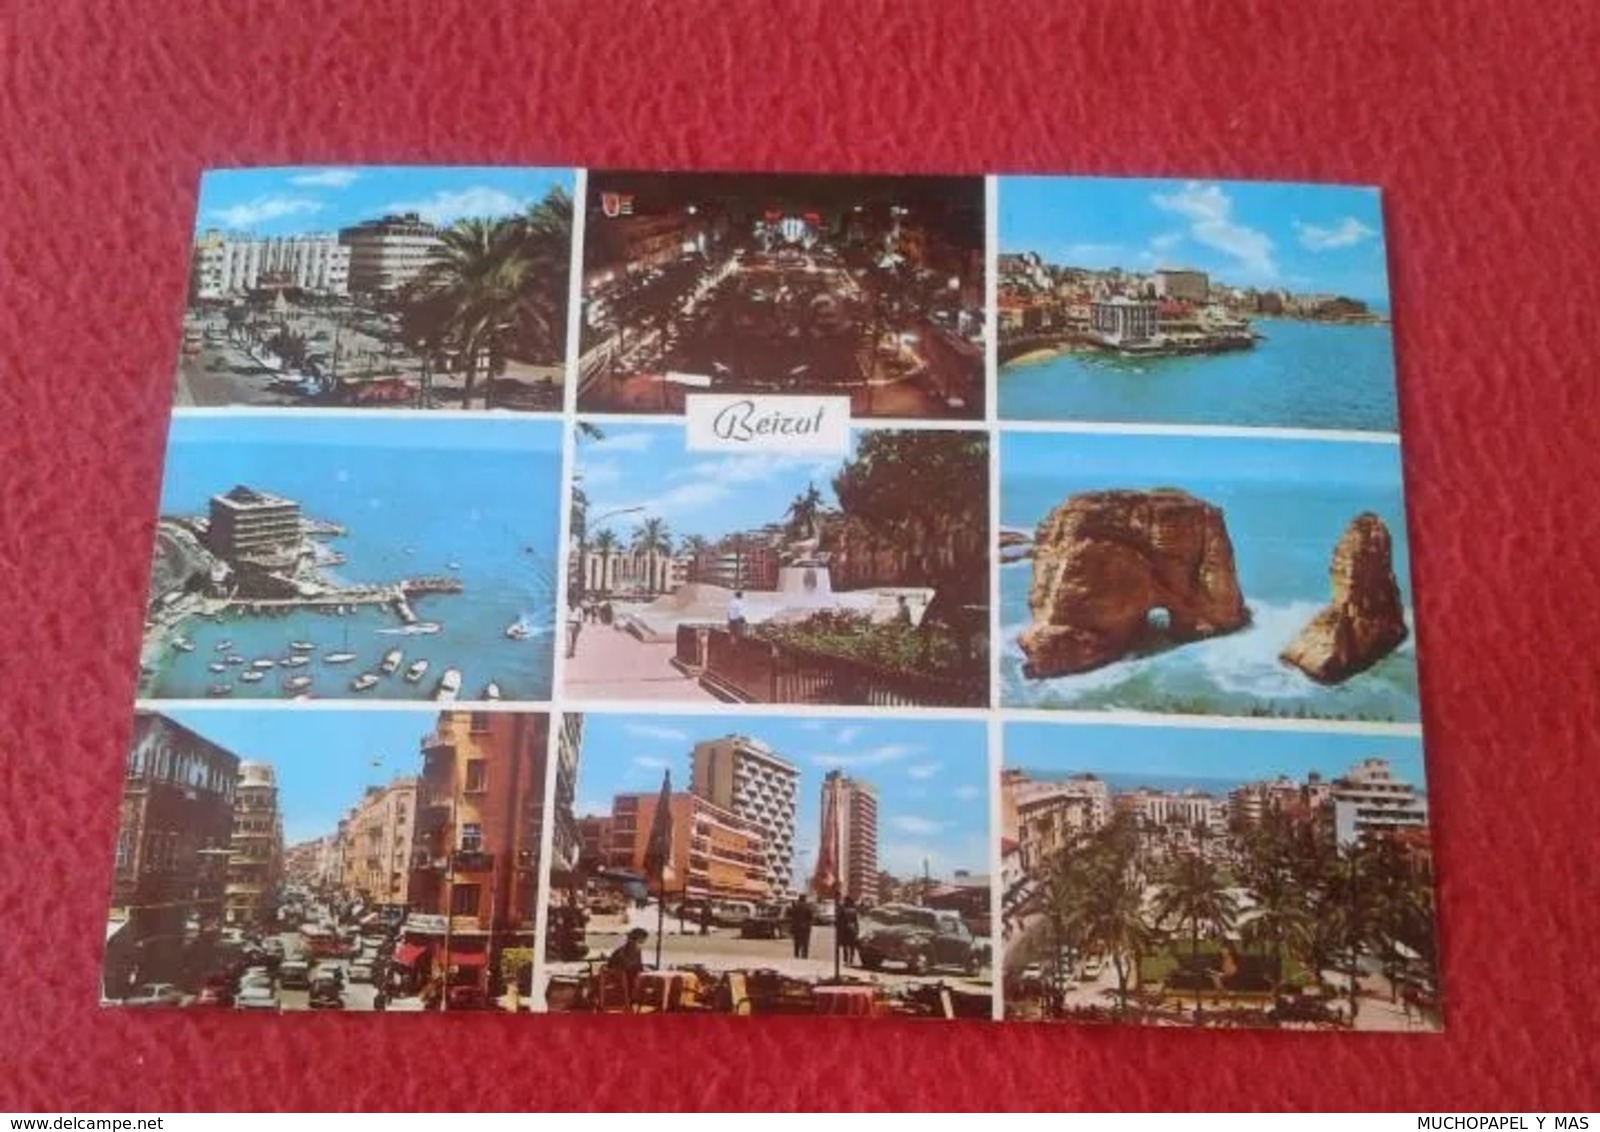 POSTAL POST CARD LIBANO BEIRUT BEYROUTH LEBANON DIVERSAS VISTAS VER FOTO/S Y DESCRIPCIÓN. CARTE POSTALE IDEAL COLECCIÓN - Líbano